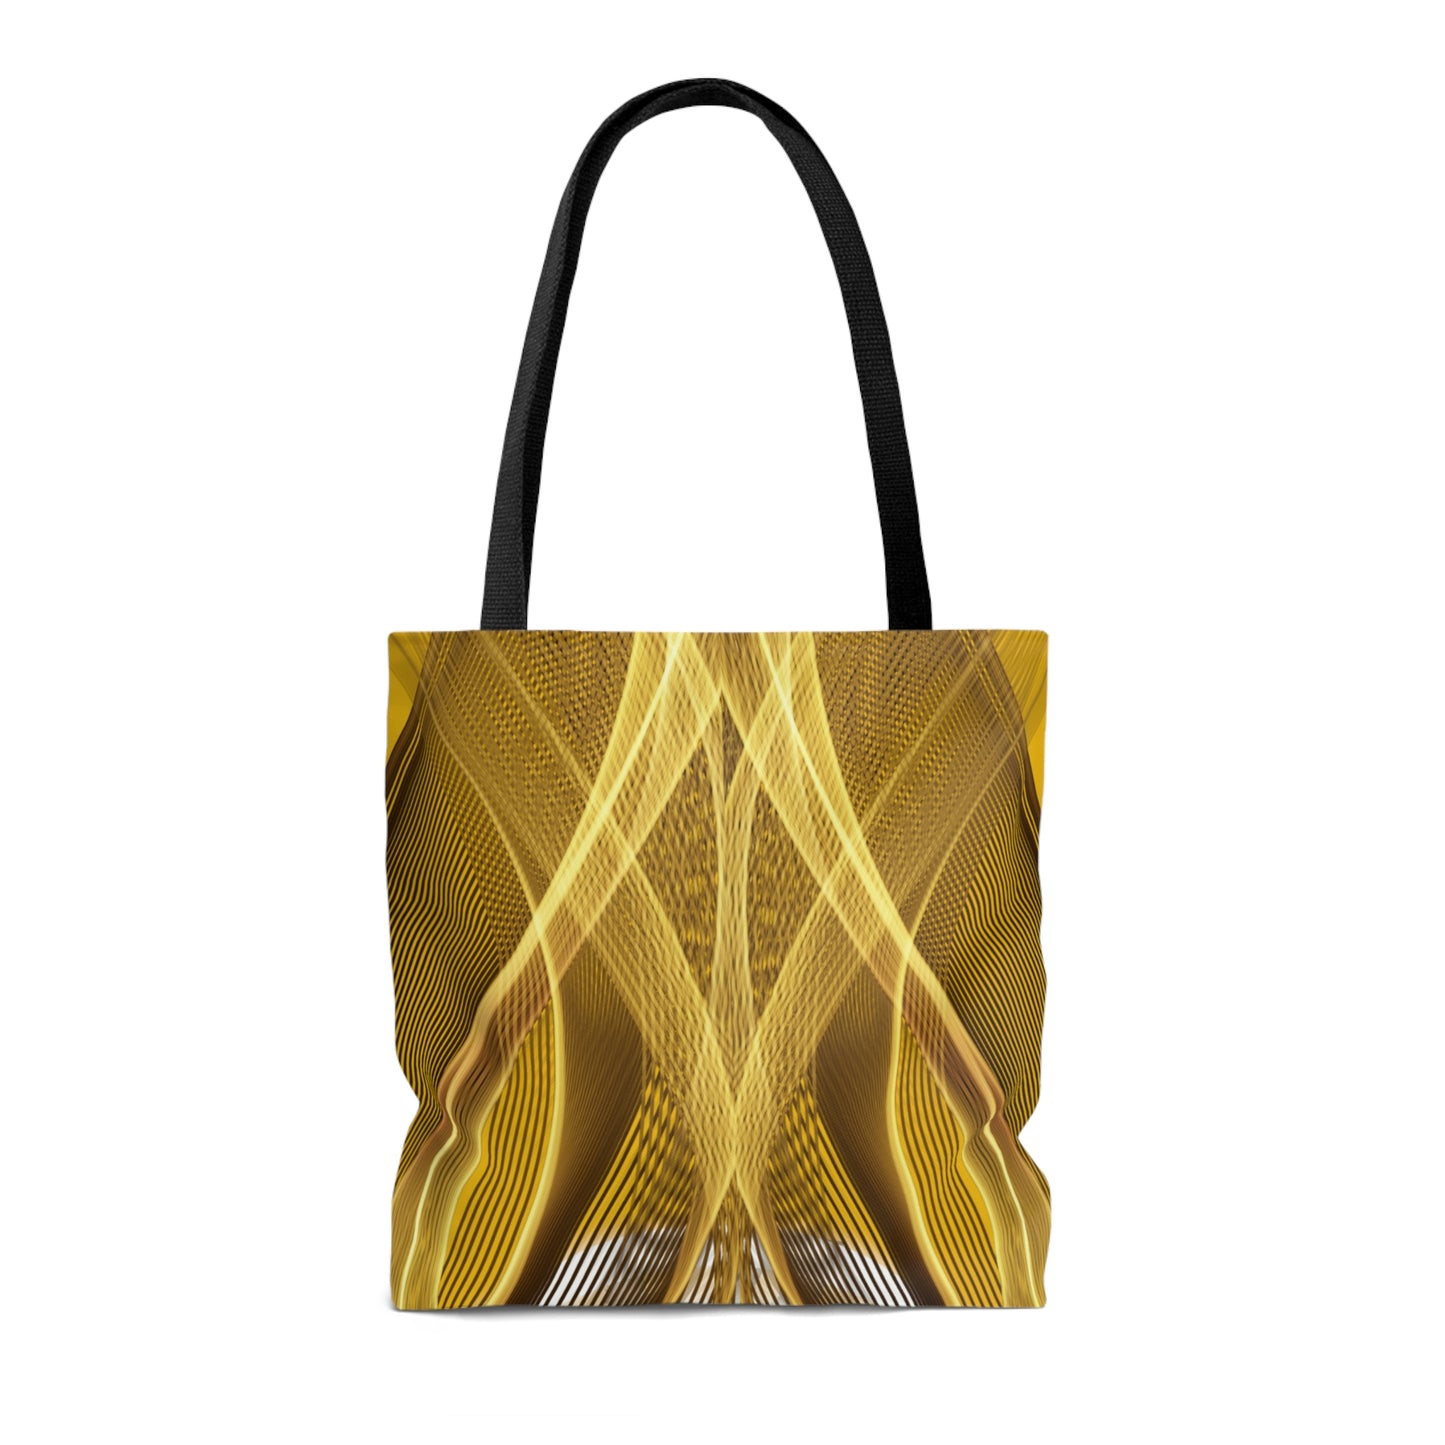 Yellow Bridal Tote | Women Handbag | Custom Wedding Bag | Bridal Shower Gift